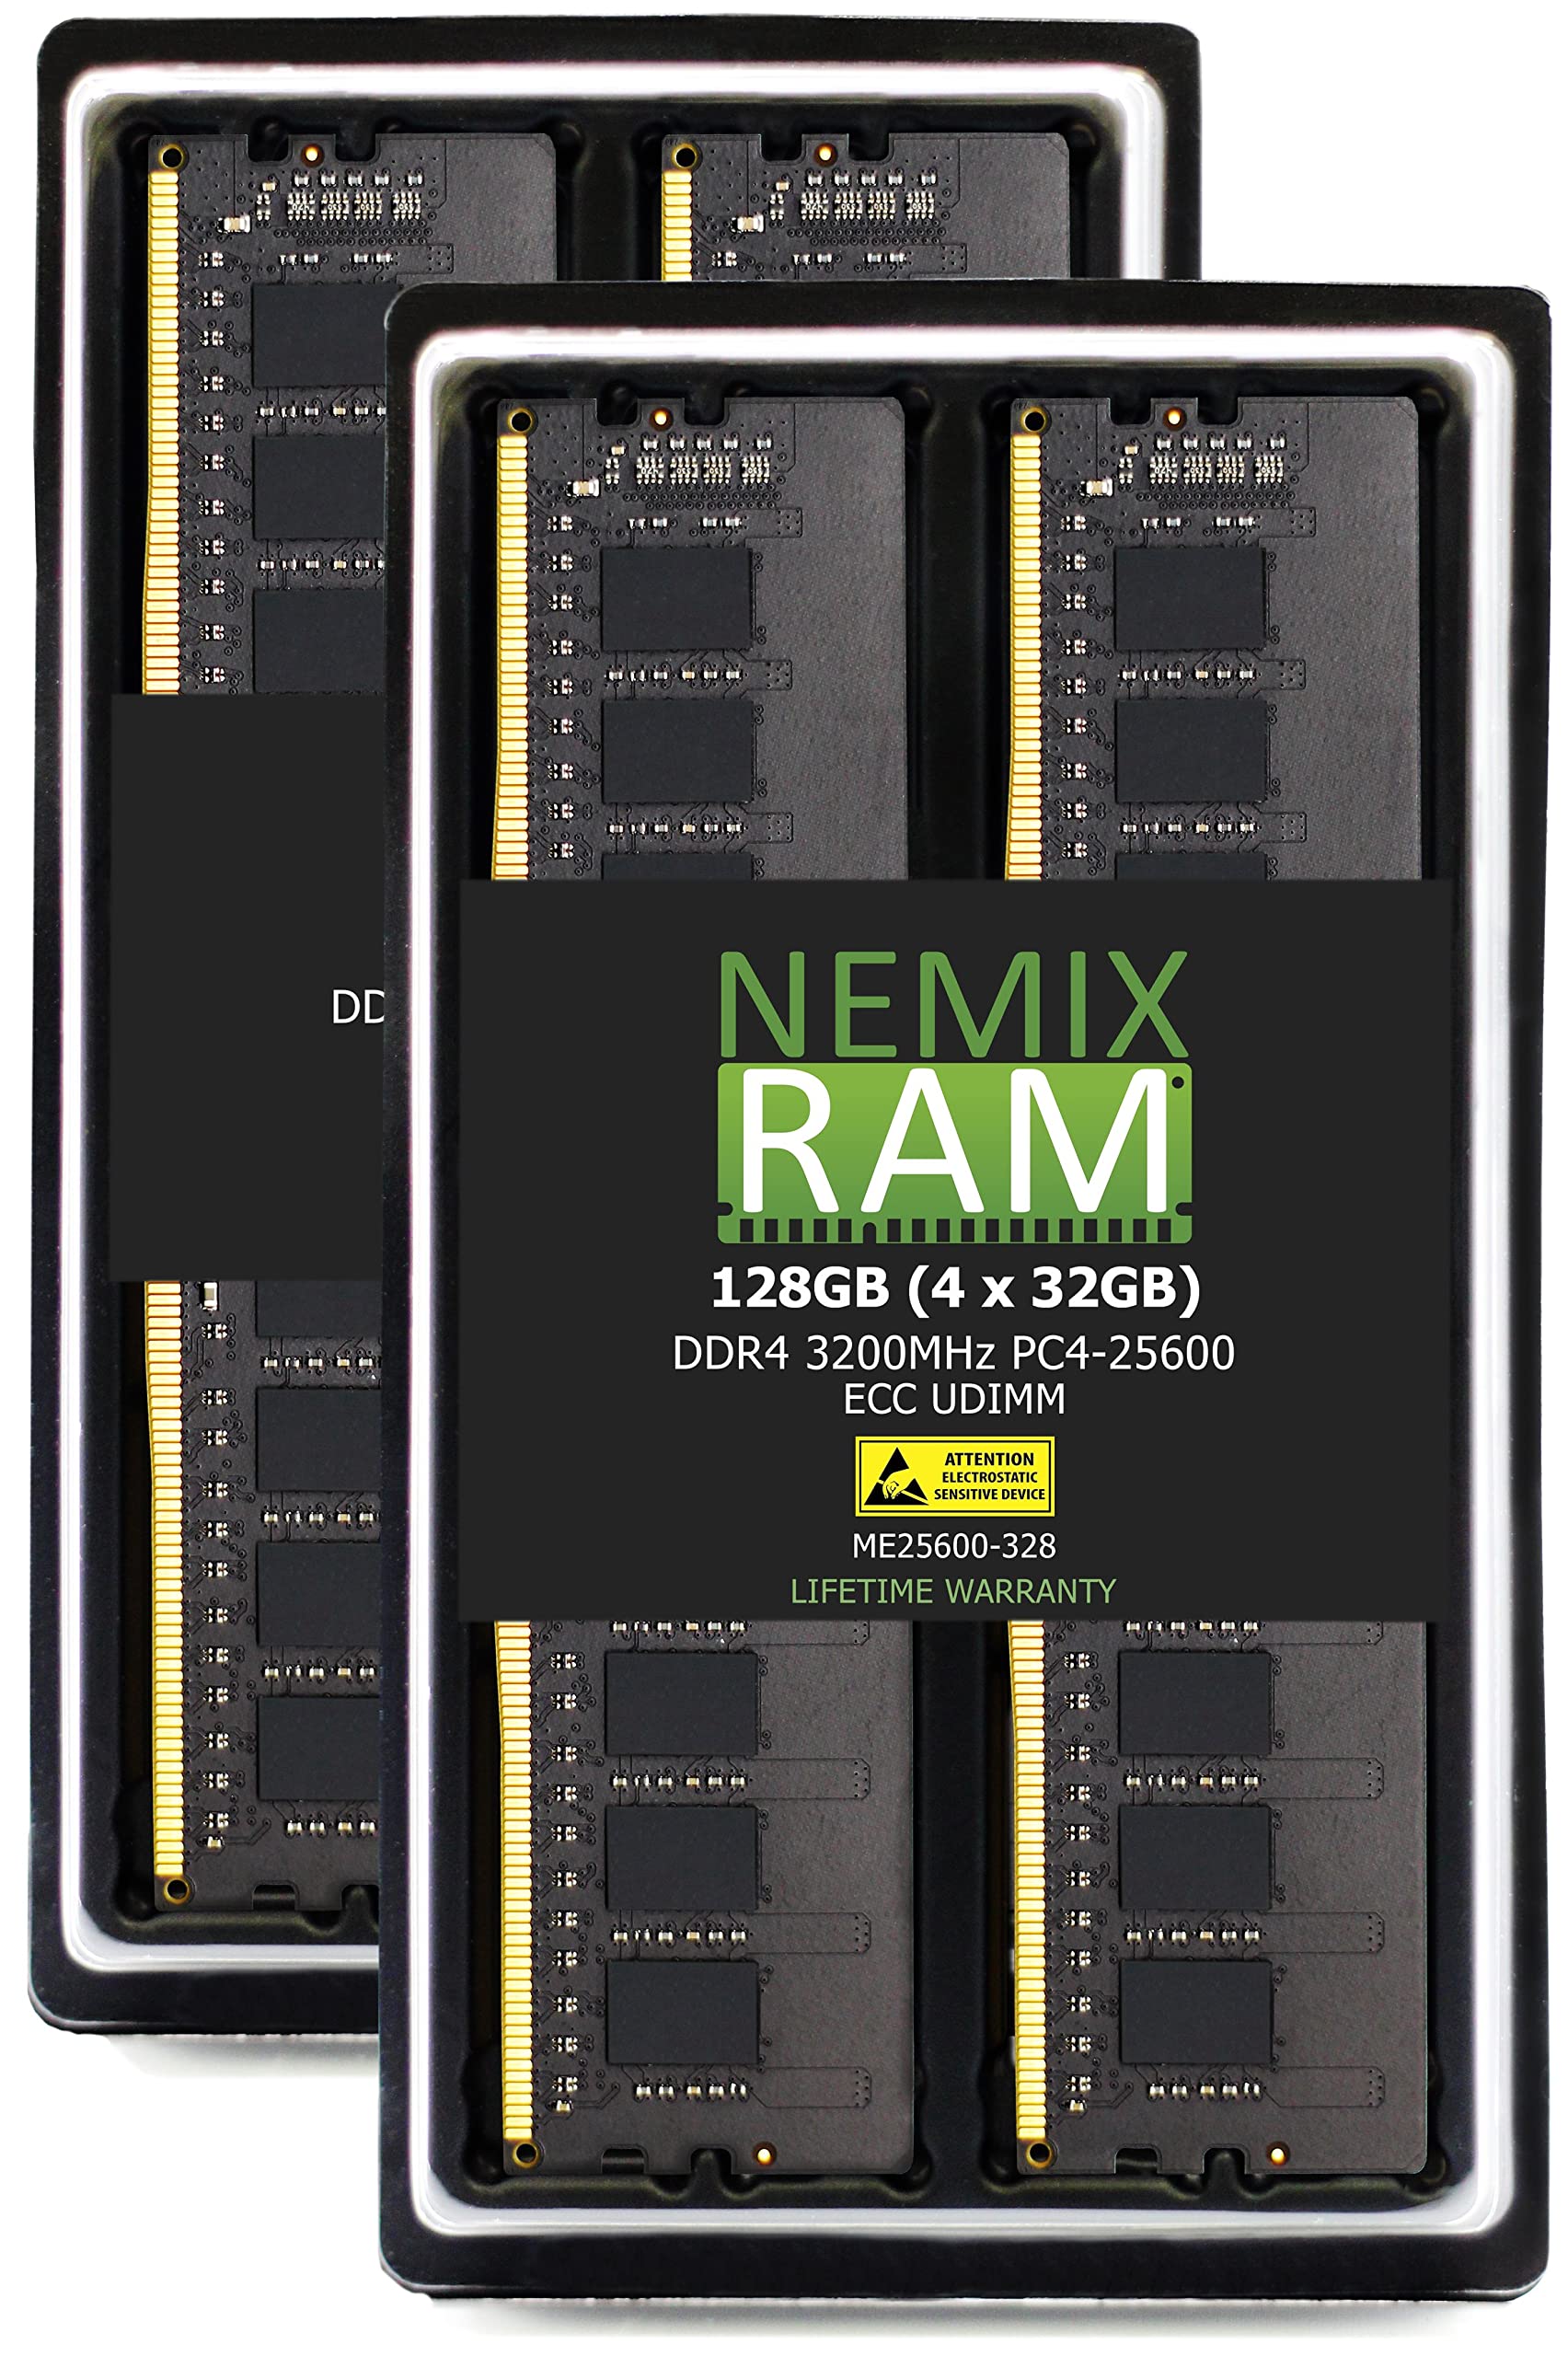 NEMIX RAM 128GB 4X32GB DDR4 3200MHZ PC4-25600 ECC UDIMM Compatible with SUPERMICRO Motherboard B3ST1-CPU-001